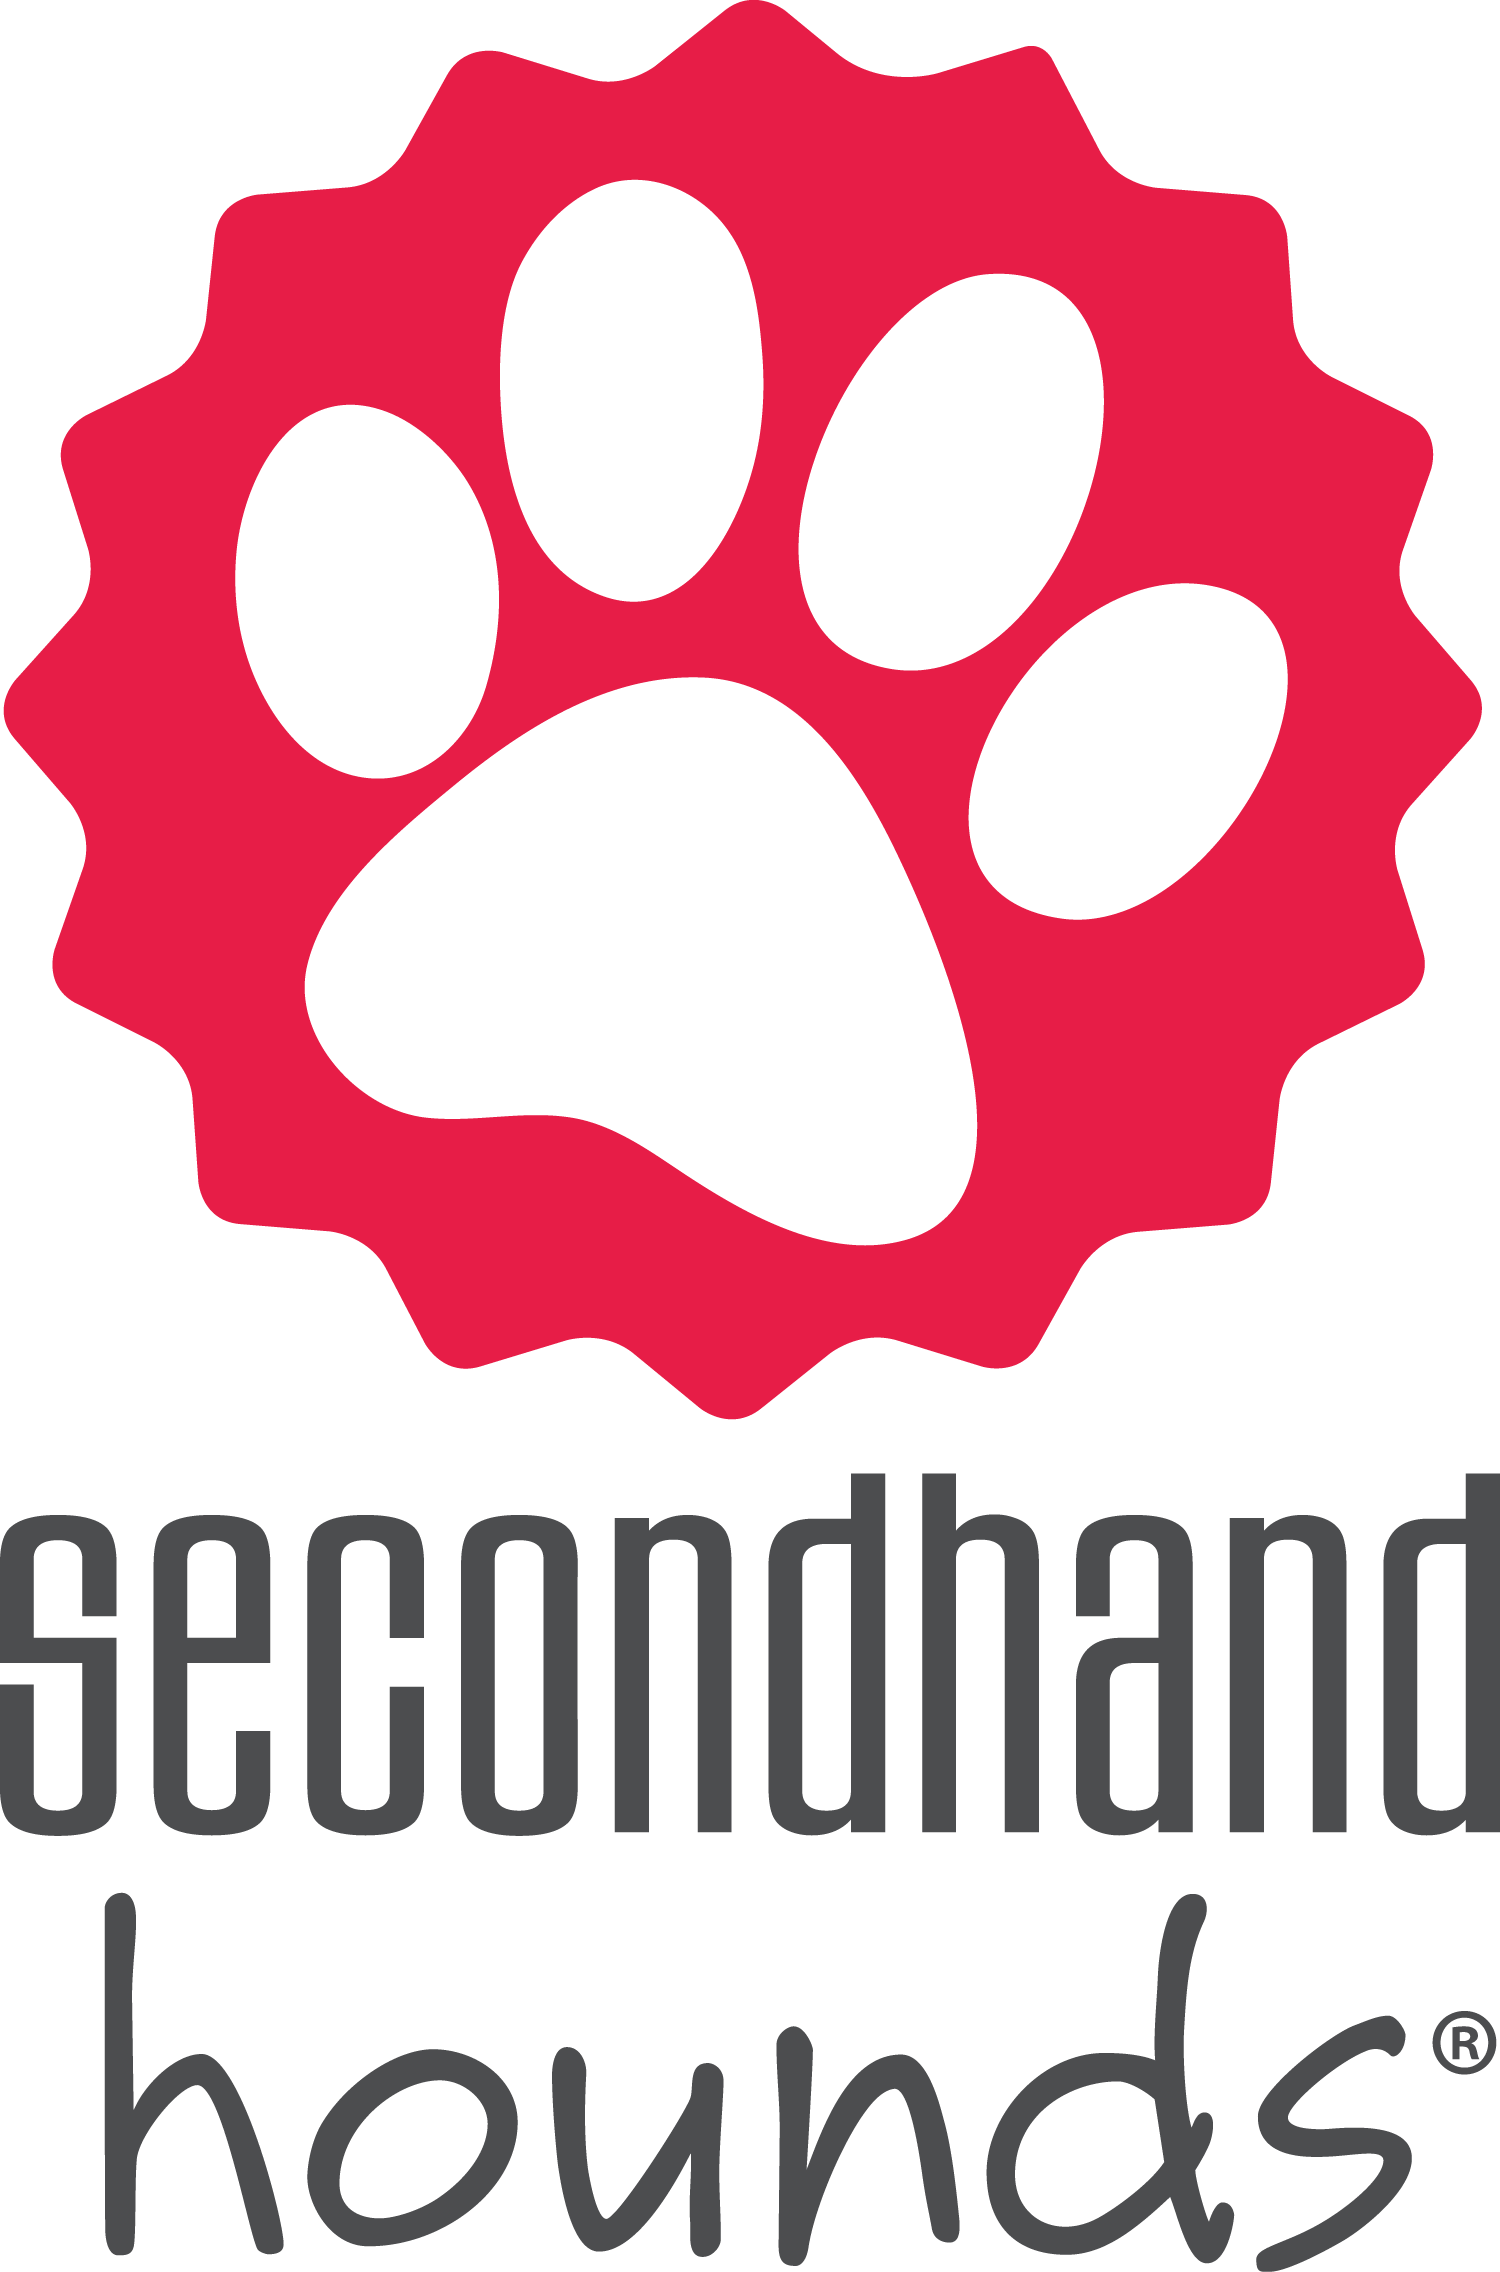 secondhand hounds logos